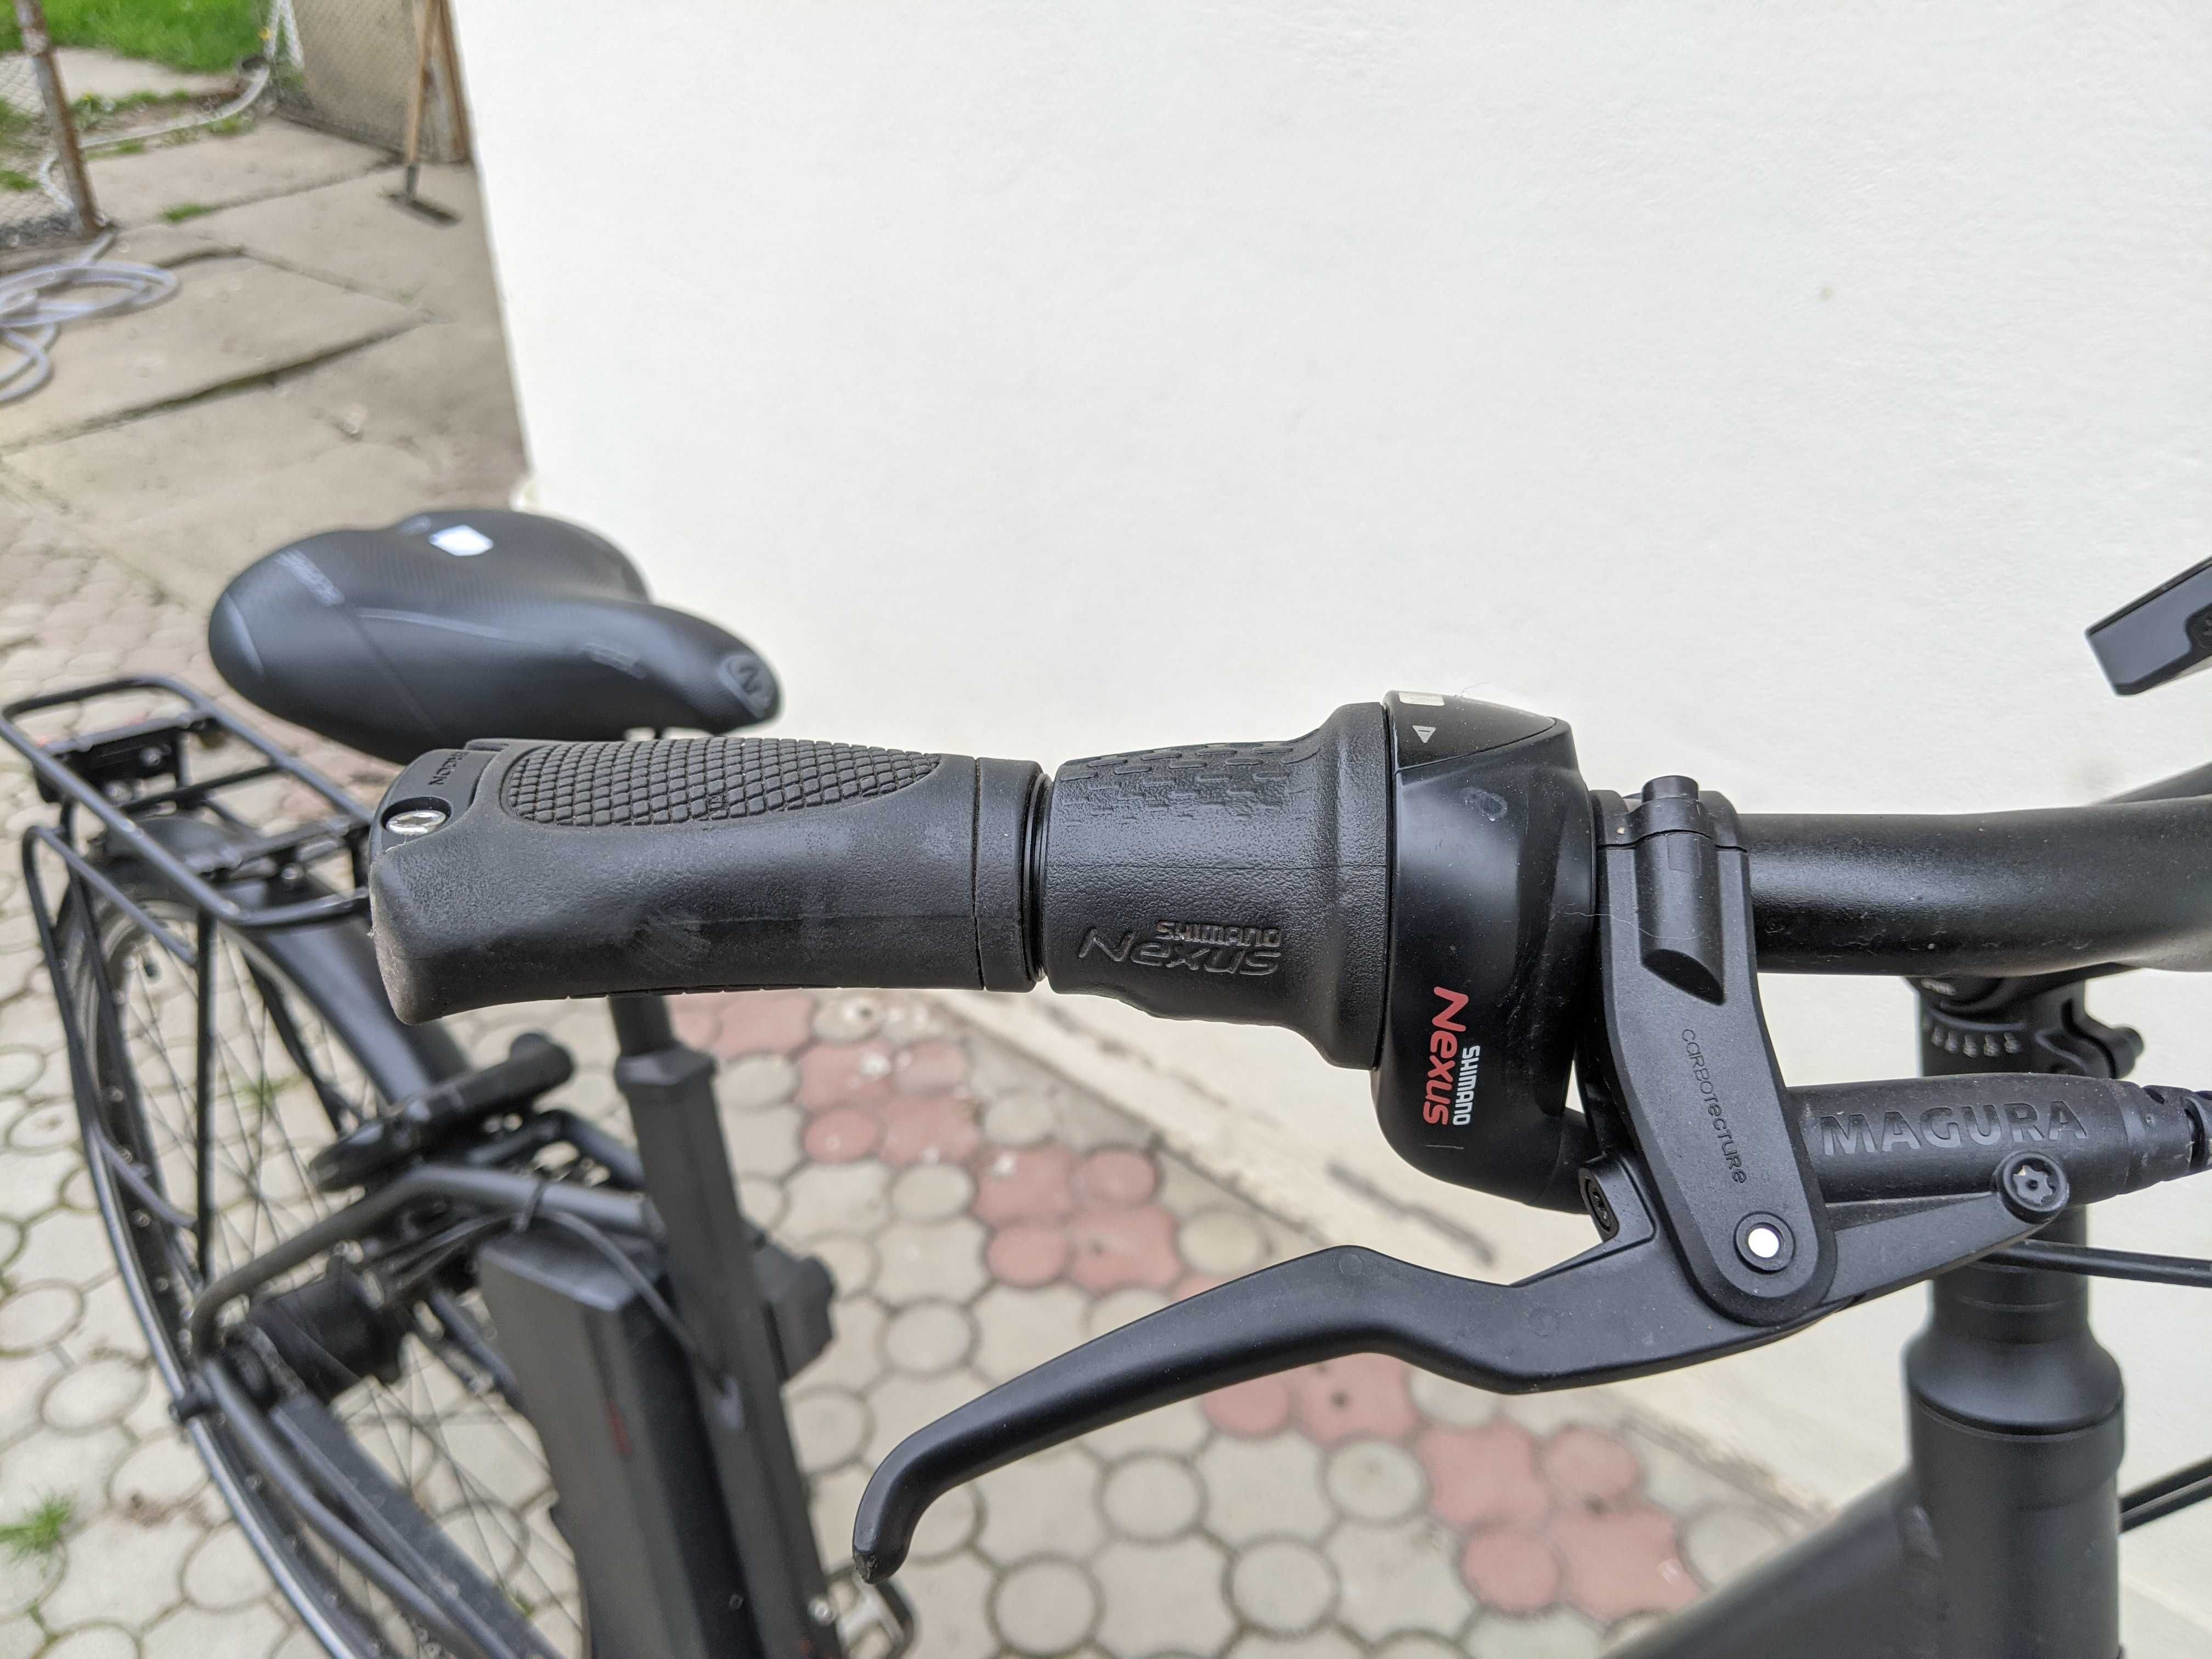 Bicicleta Dama Electrica Kalkhoff , Impulse , Magura